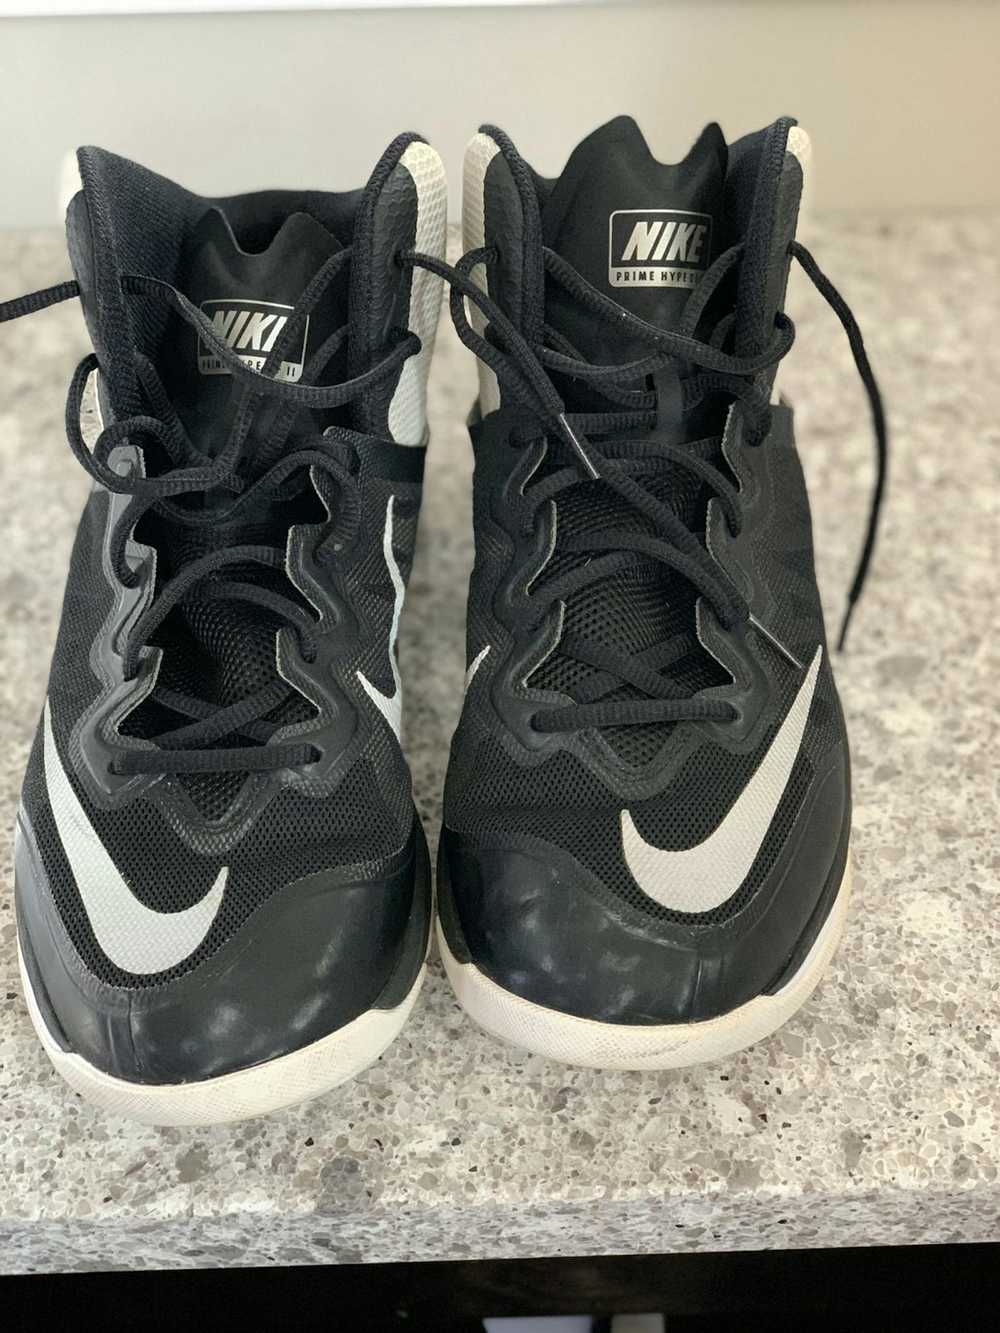 Nike Nike Prime Hype DF 2 Basketball Shoes - image 3